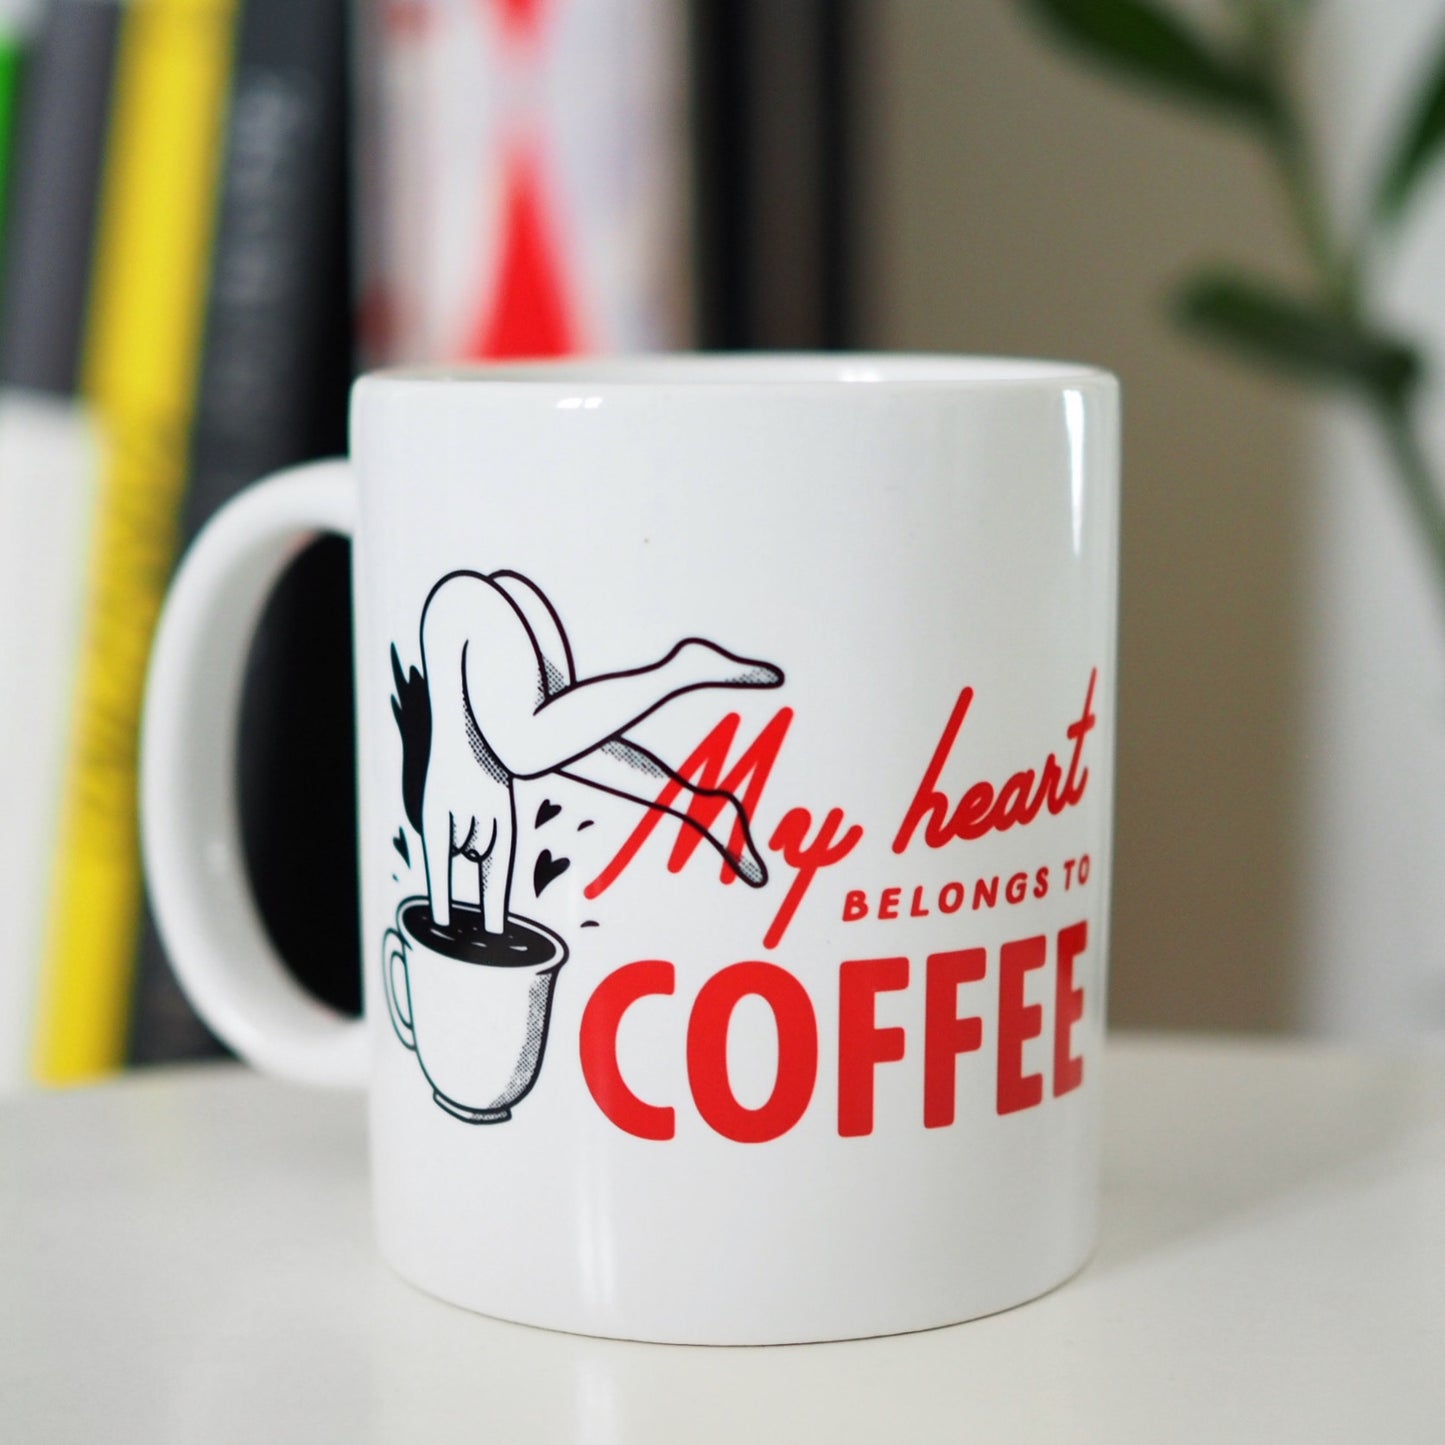 My Heart Belongs to Coffee - Ceramic Coffee Mug